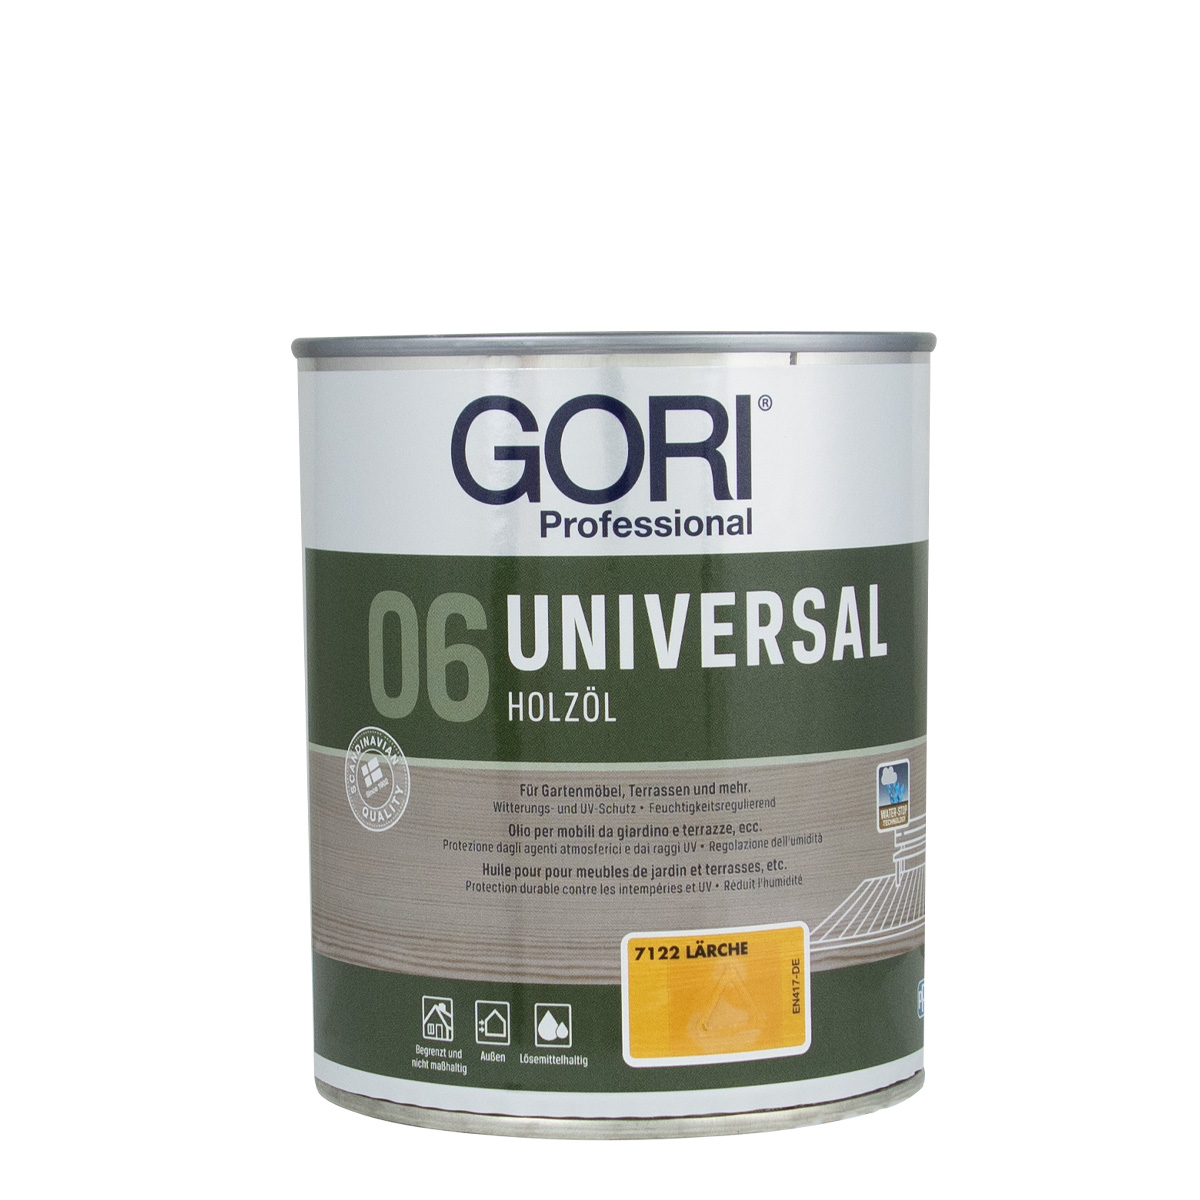 Gori 06 Universal Holzöl Lärche 7122 0,75L, lösemittelhaltiges Holzpflegeöl